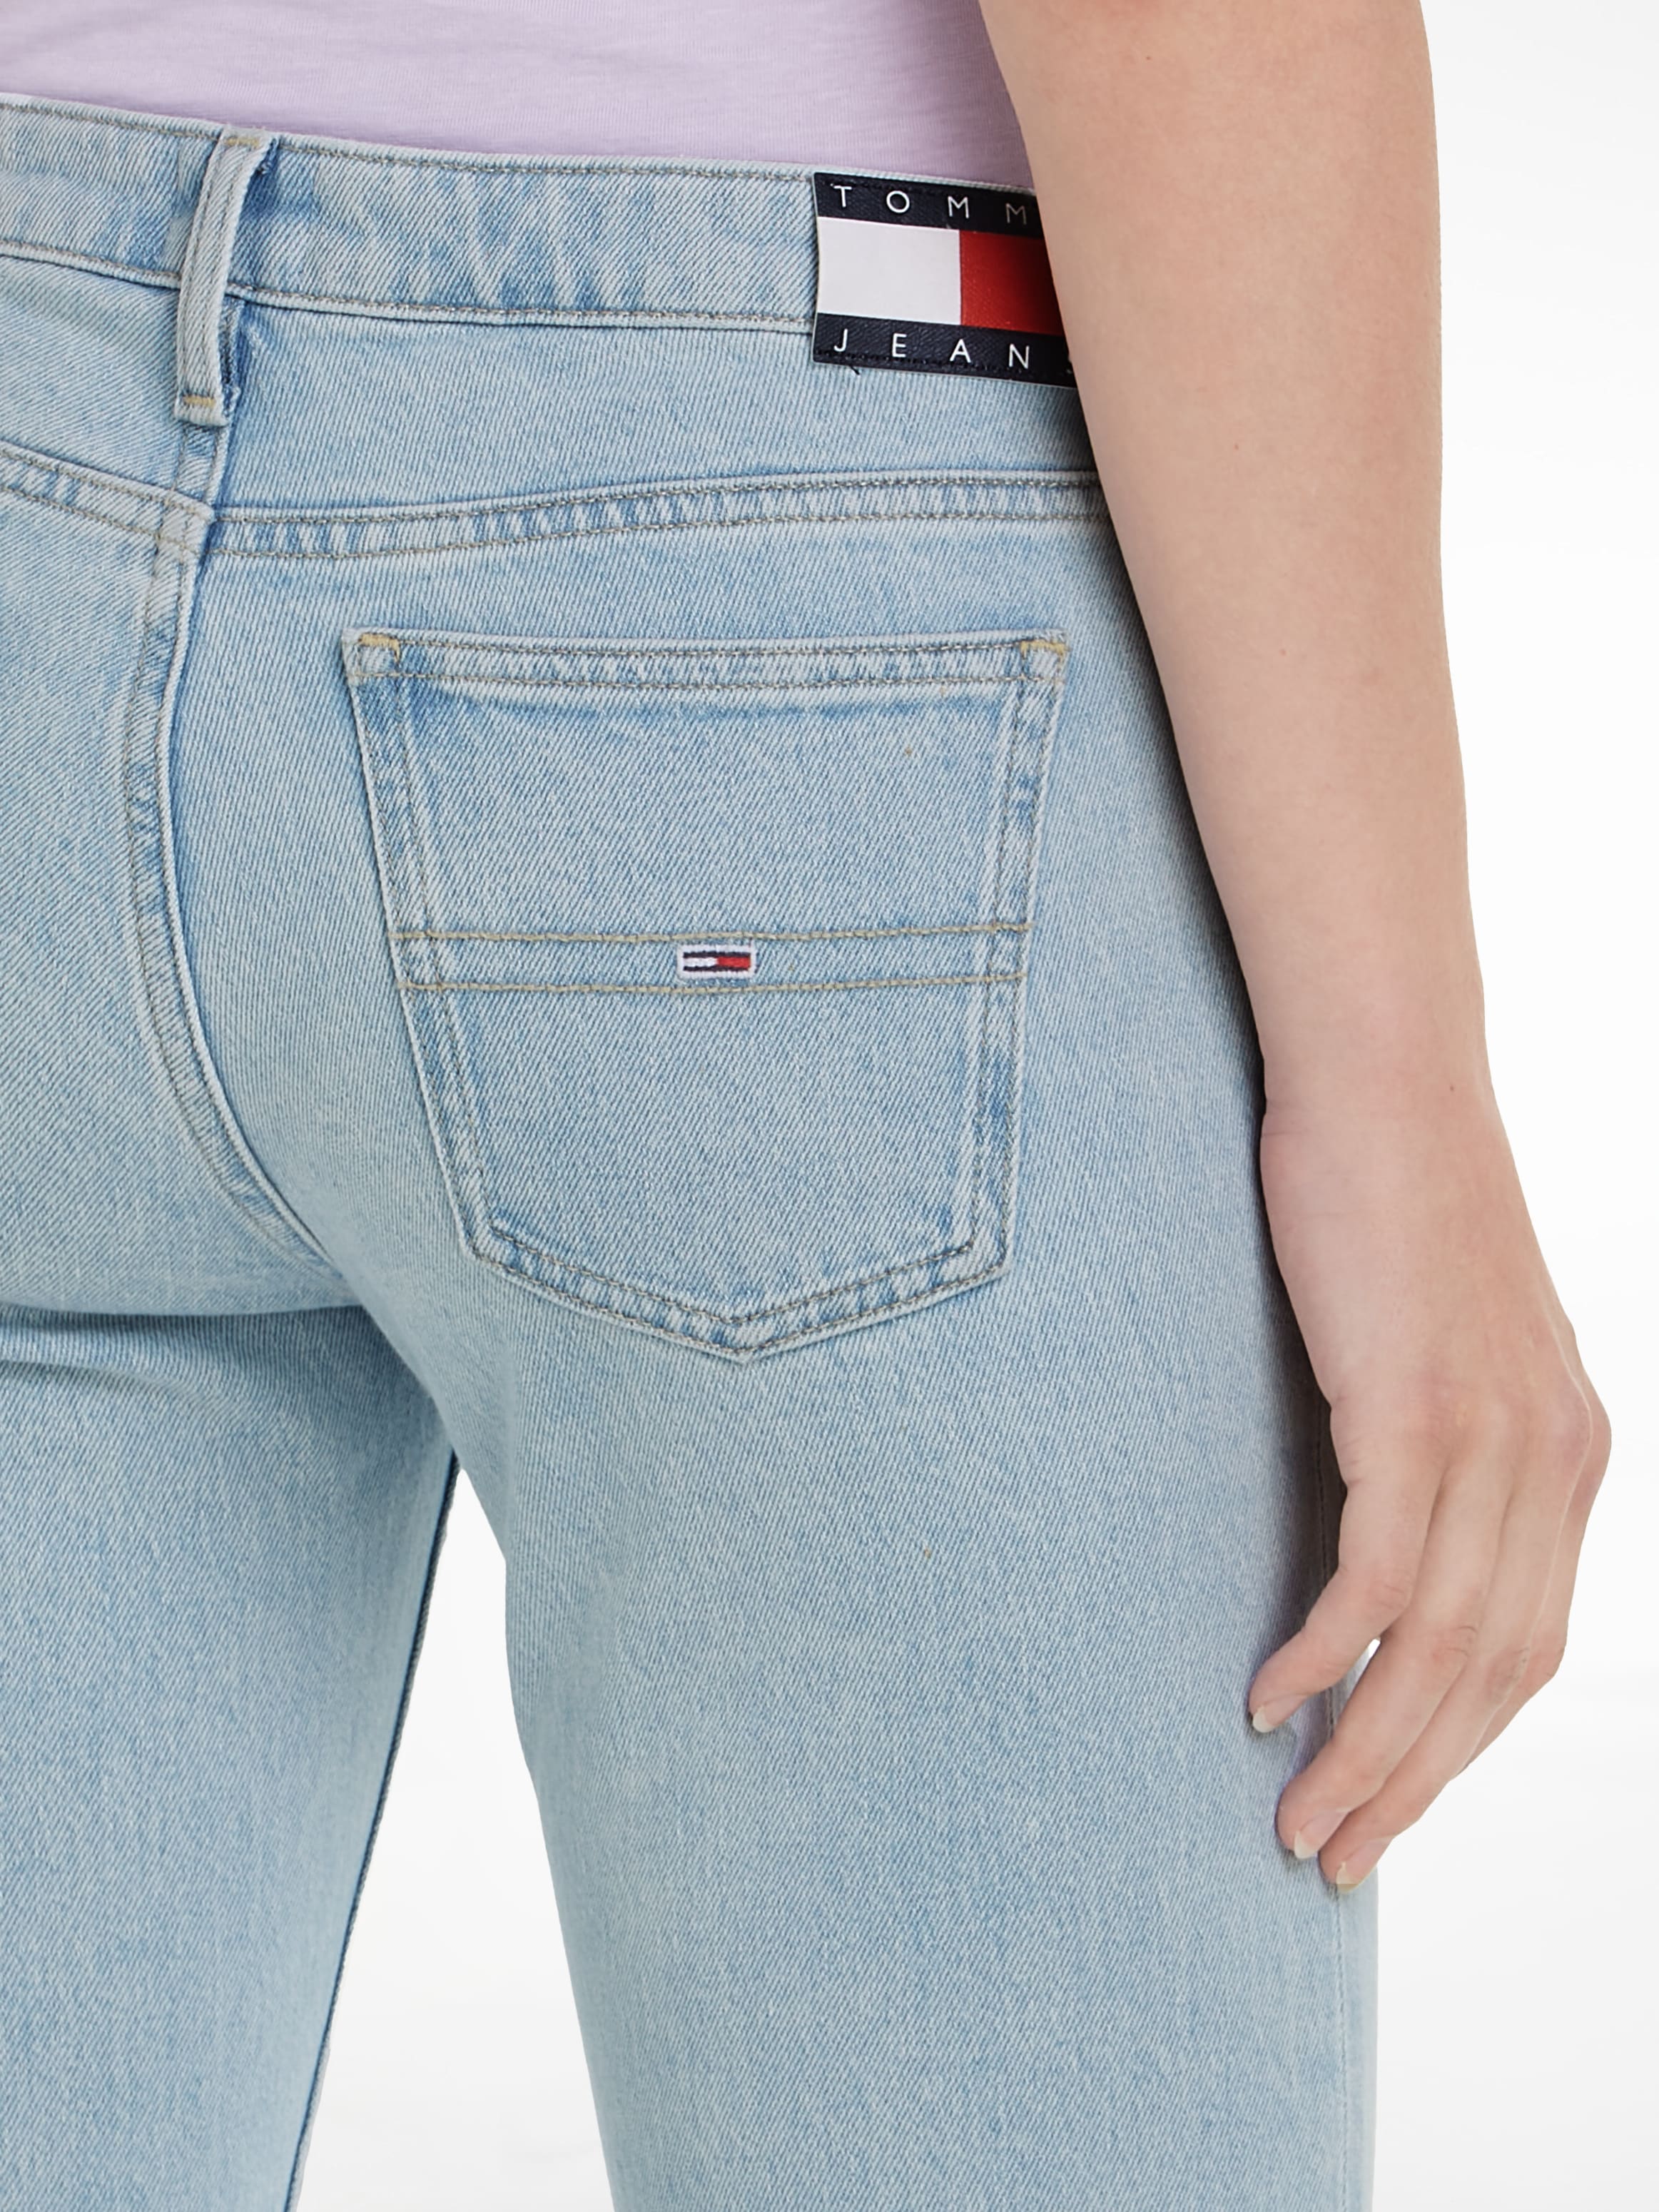 Tommy Jeans Schlagjeans, mit Tommy Jeans Logo-Badge & Flag online kaufen